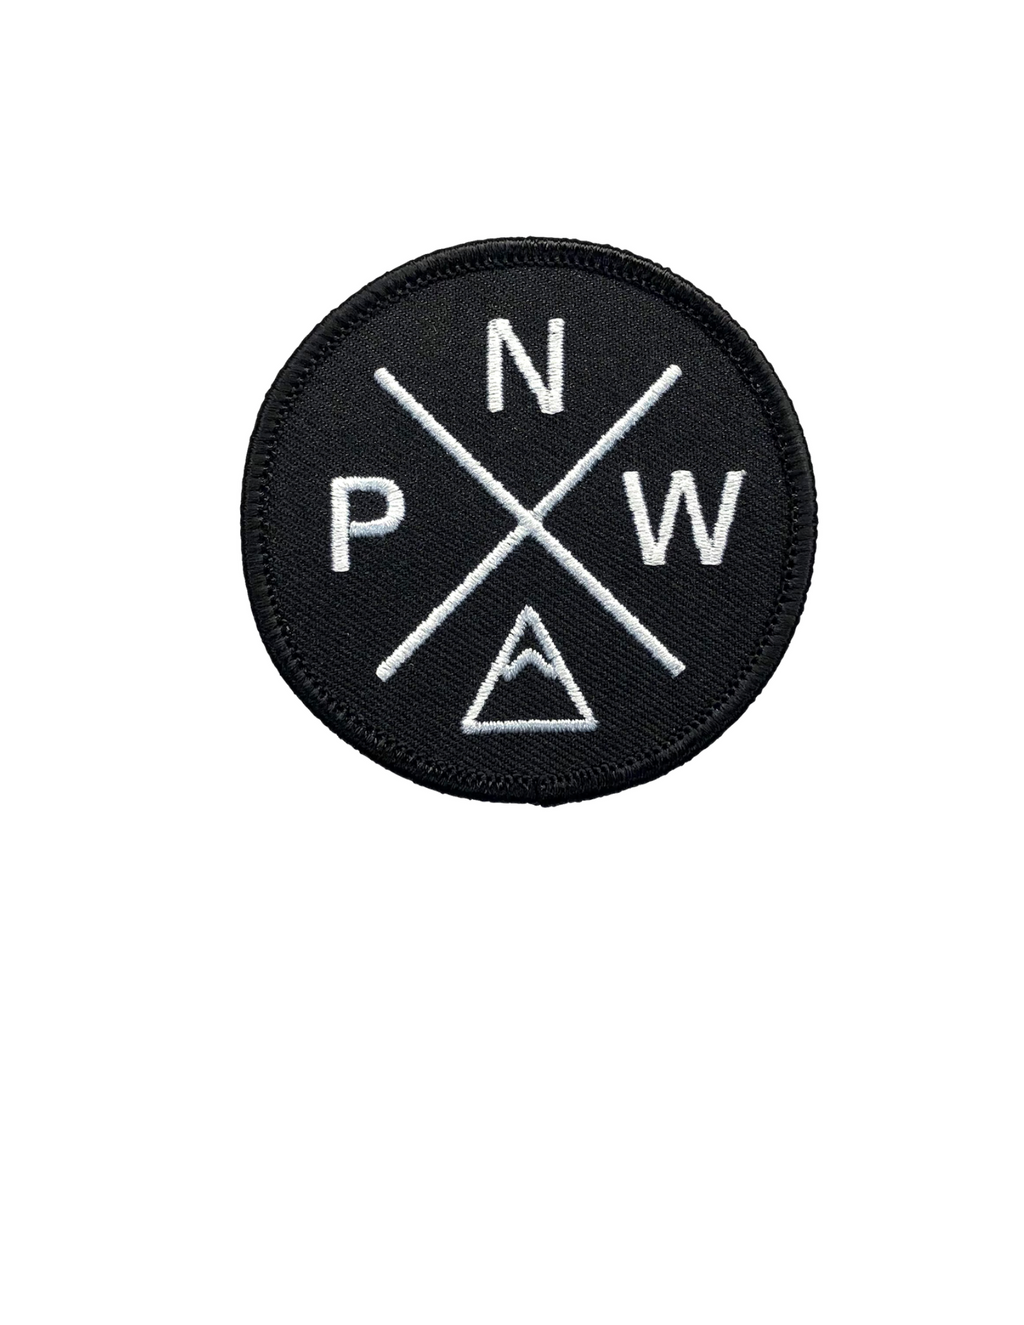 PNW Patch Black